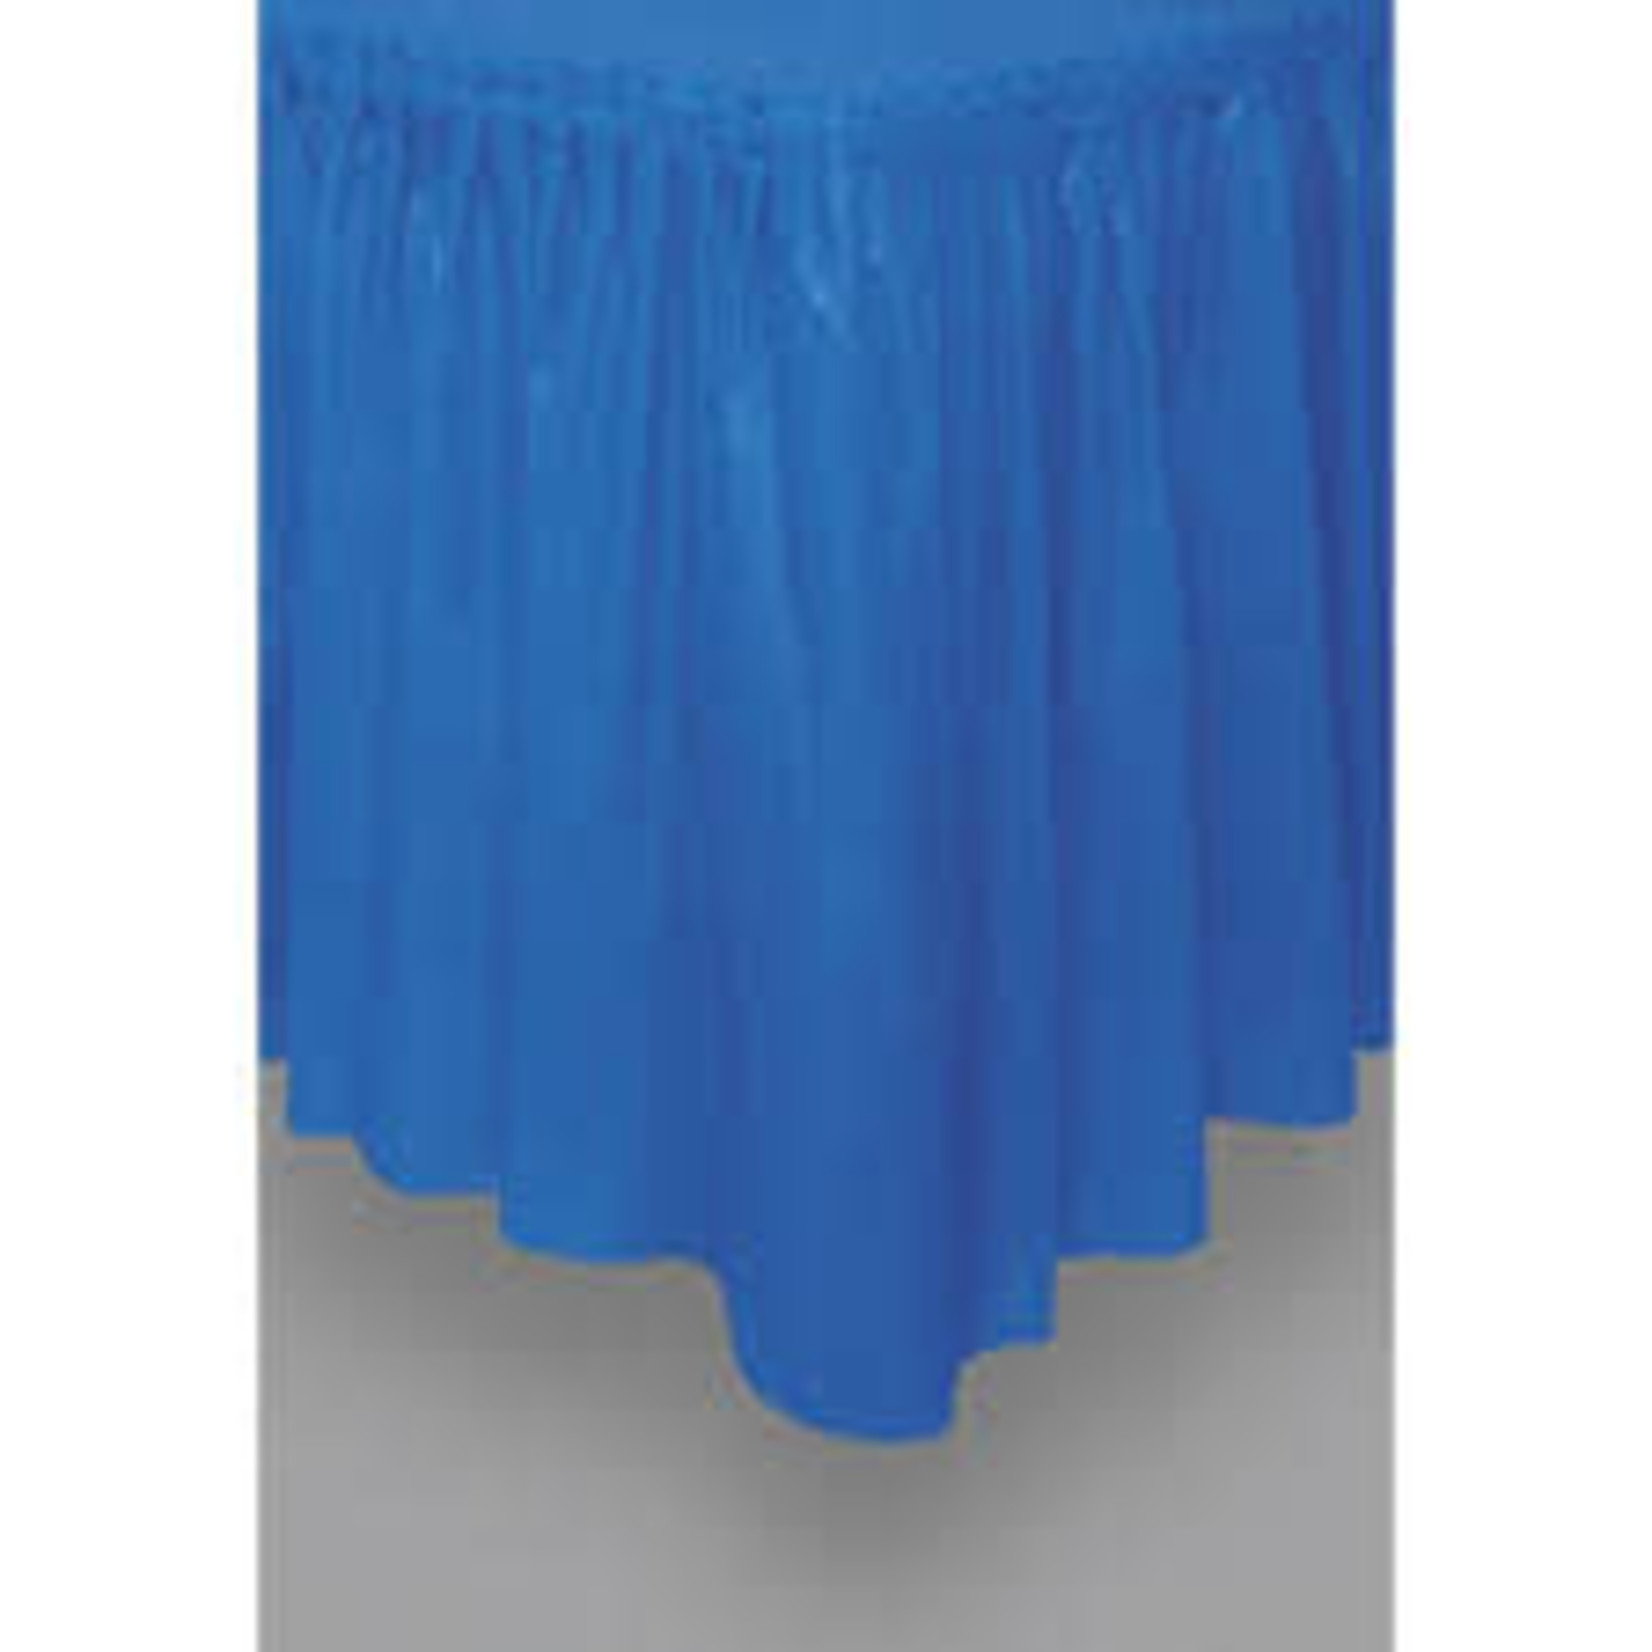 Royal Blue Tableskirt